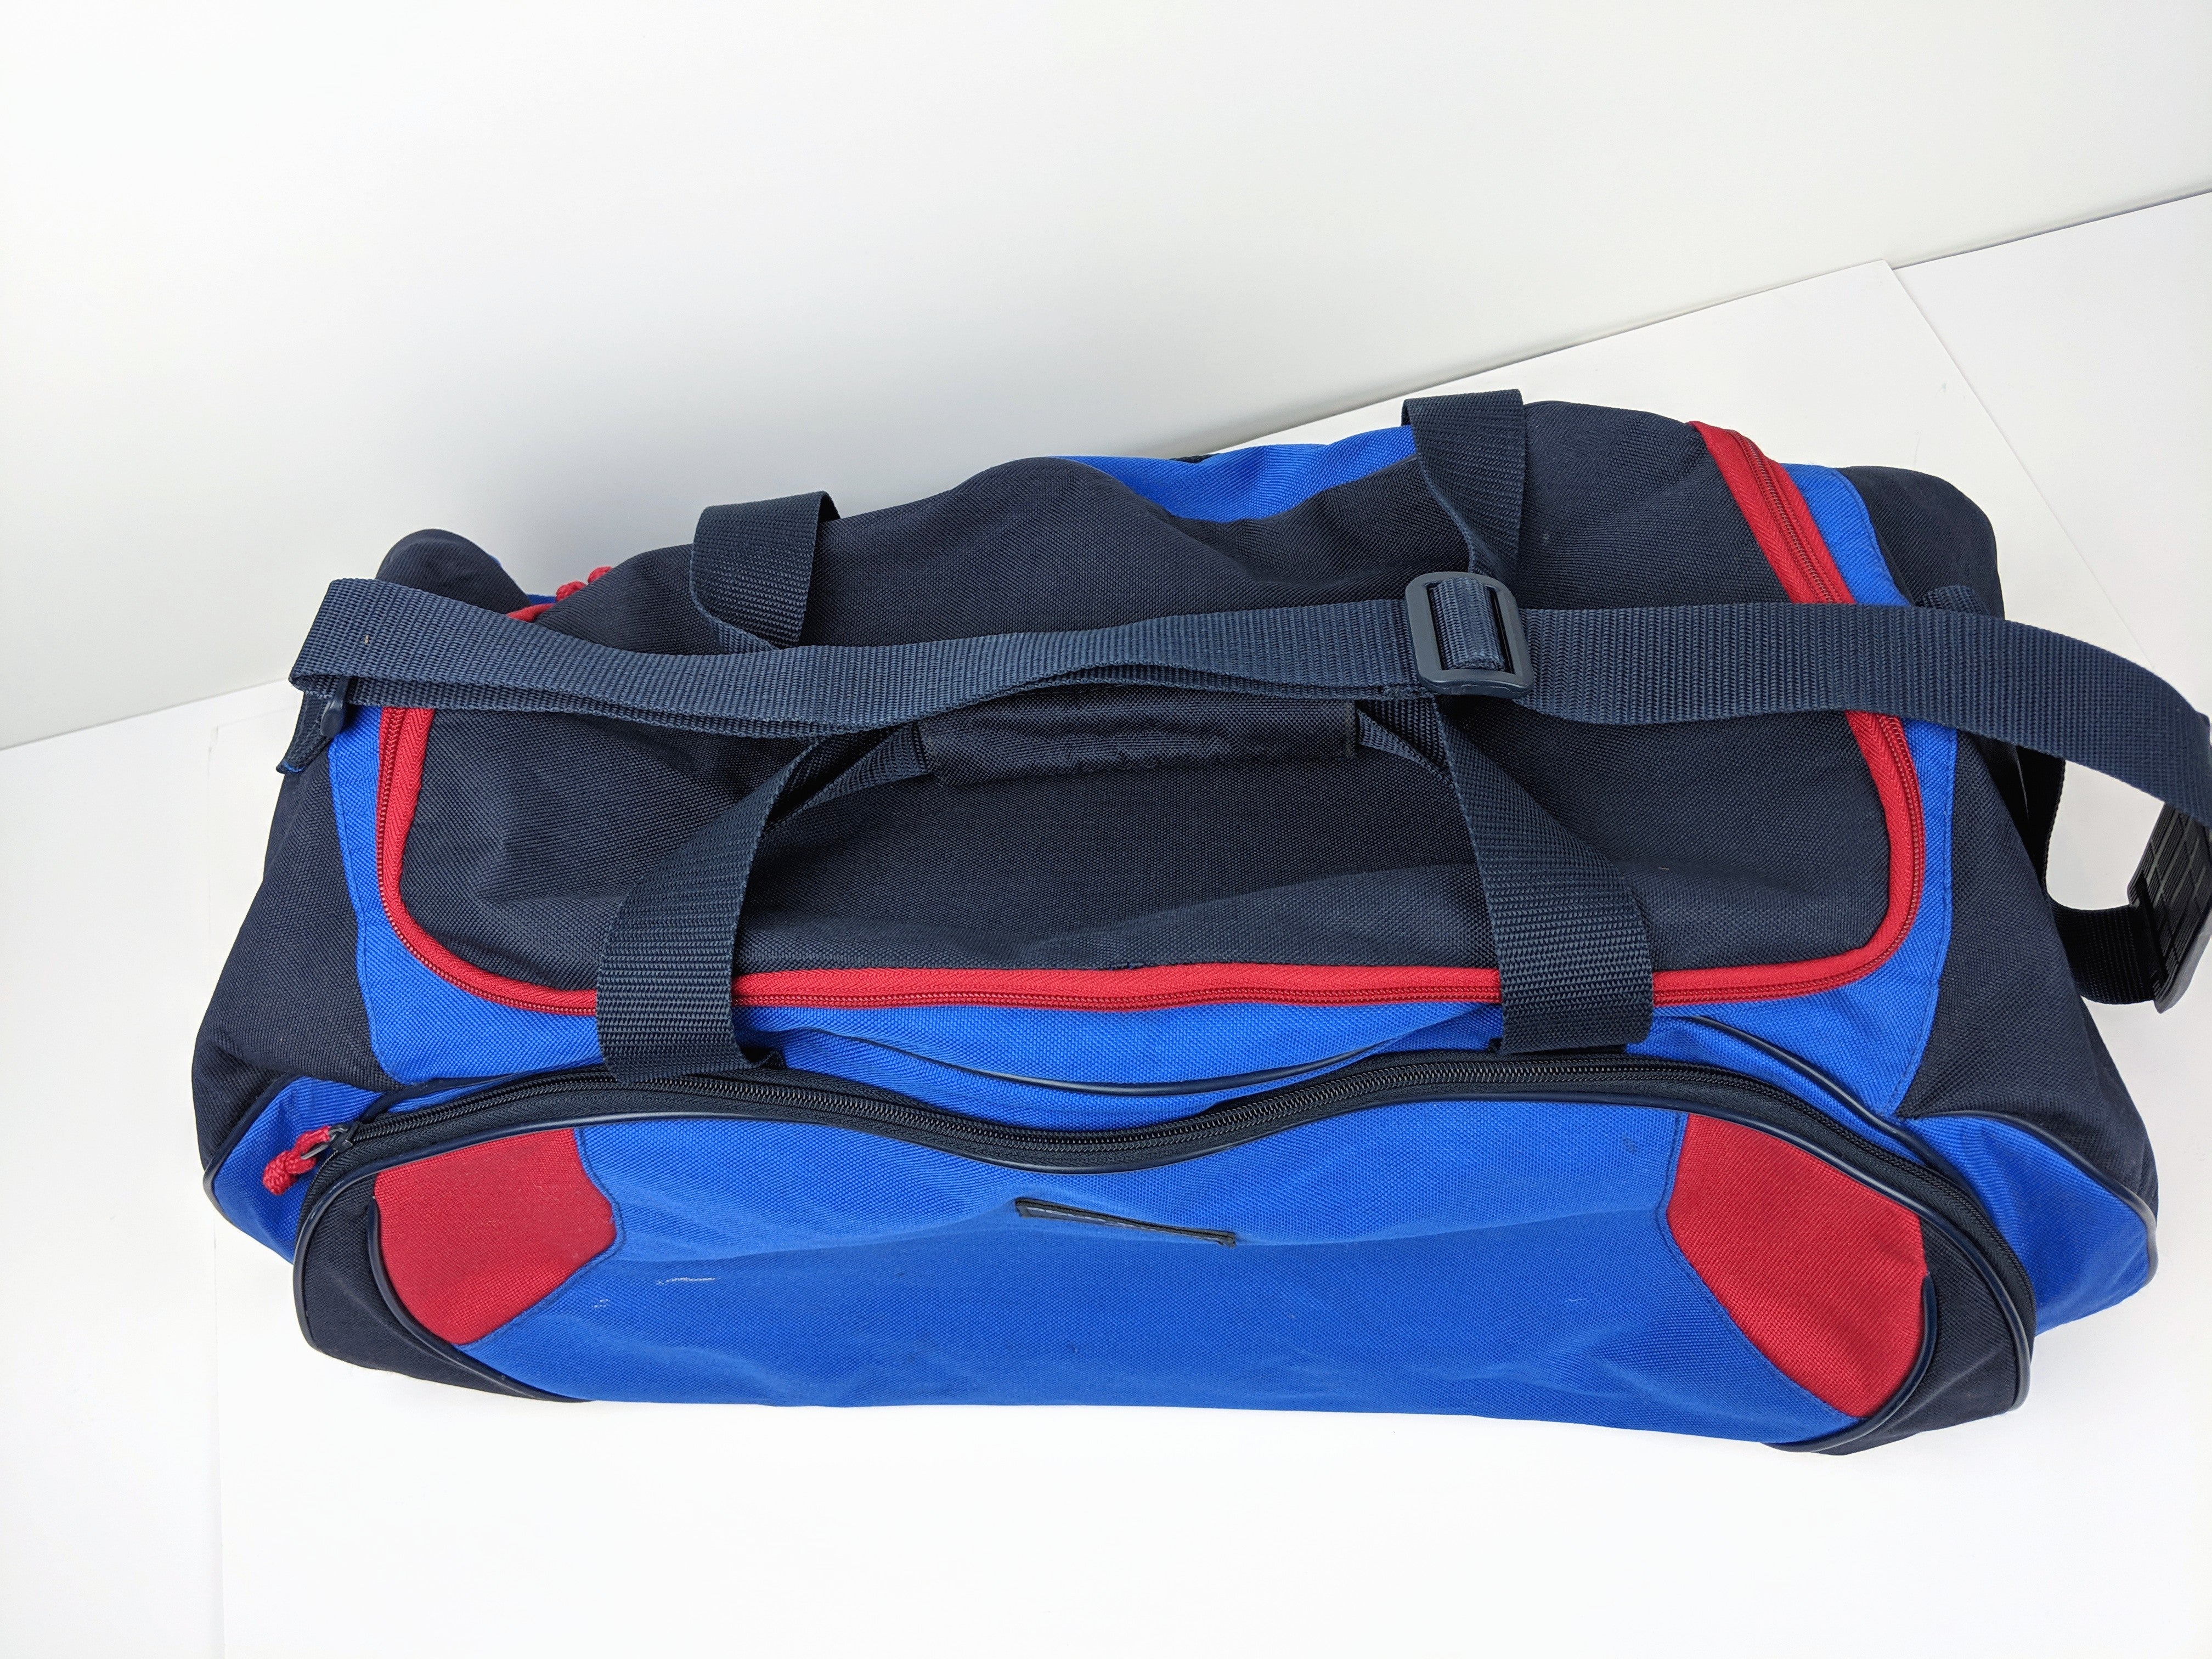 Polo Sport Duffle Bag